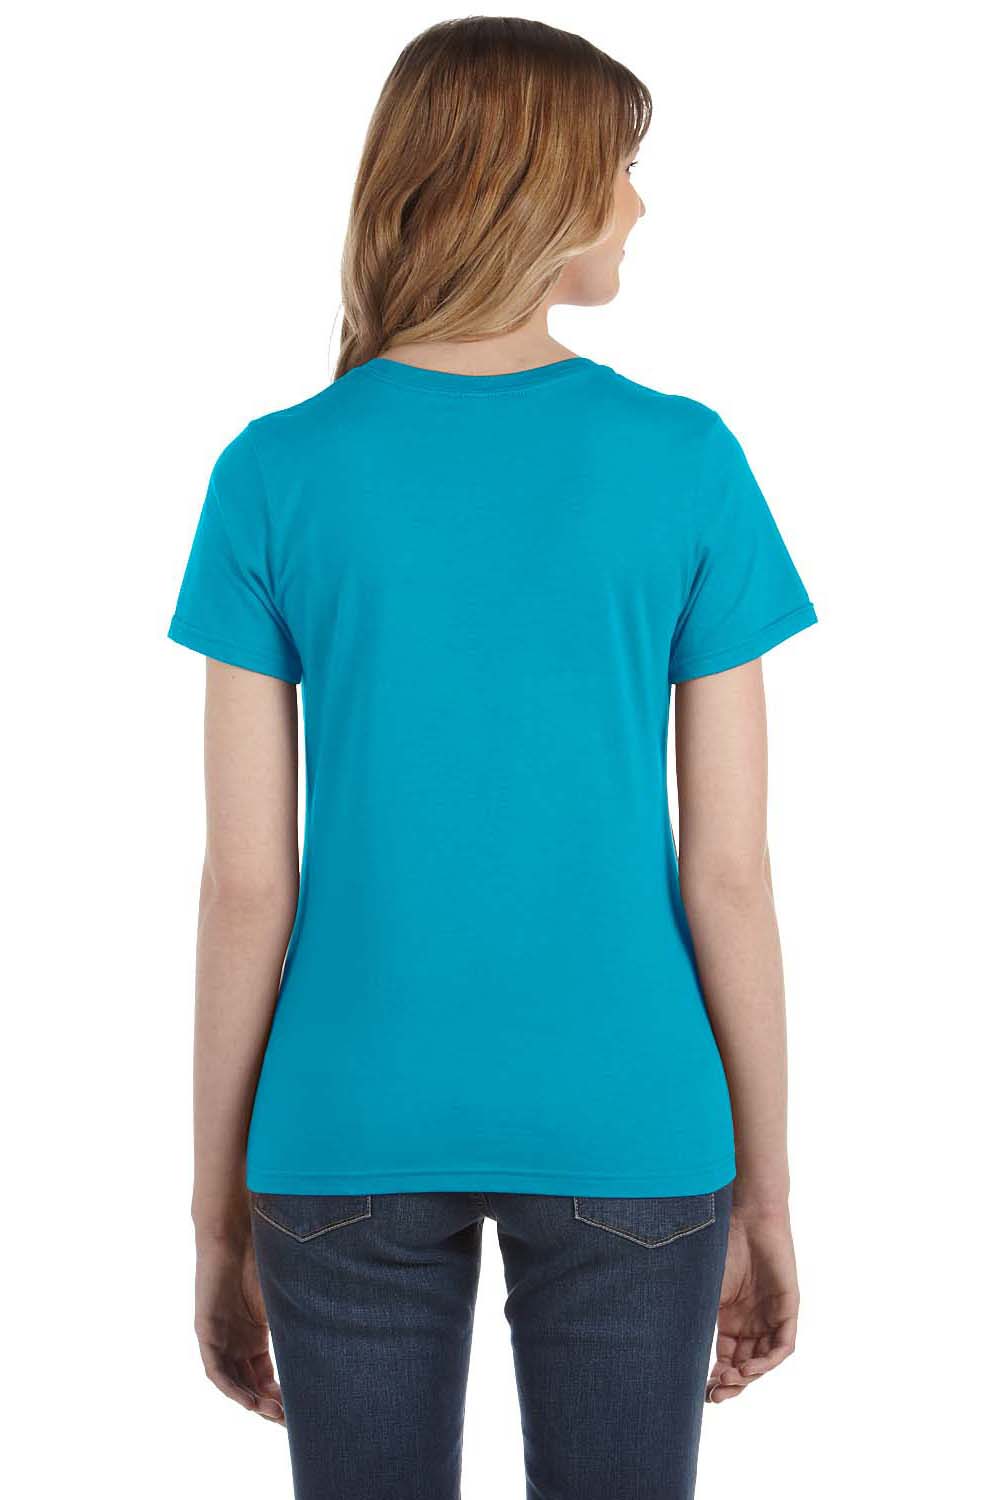 Anvil 880 Womens Short Sleeve Crewneck T-Shirt Caribbean Blue Back